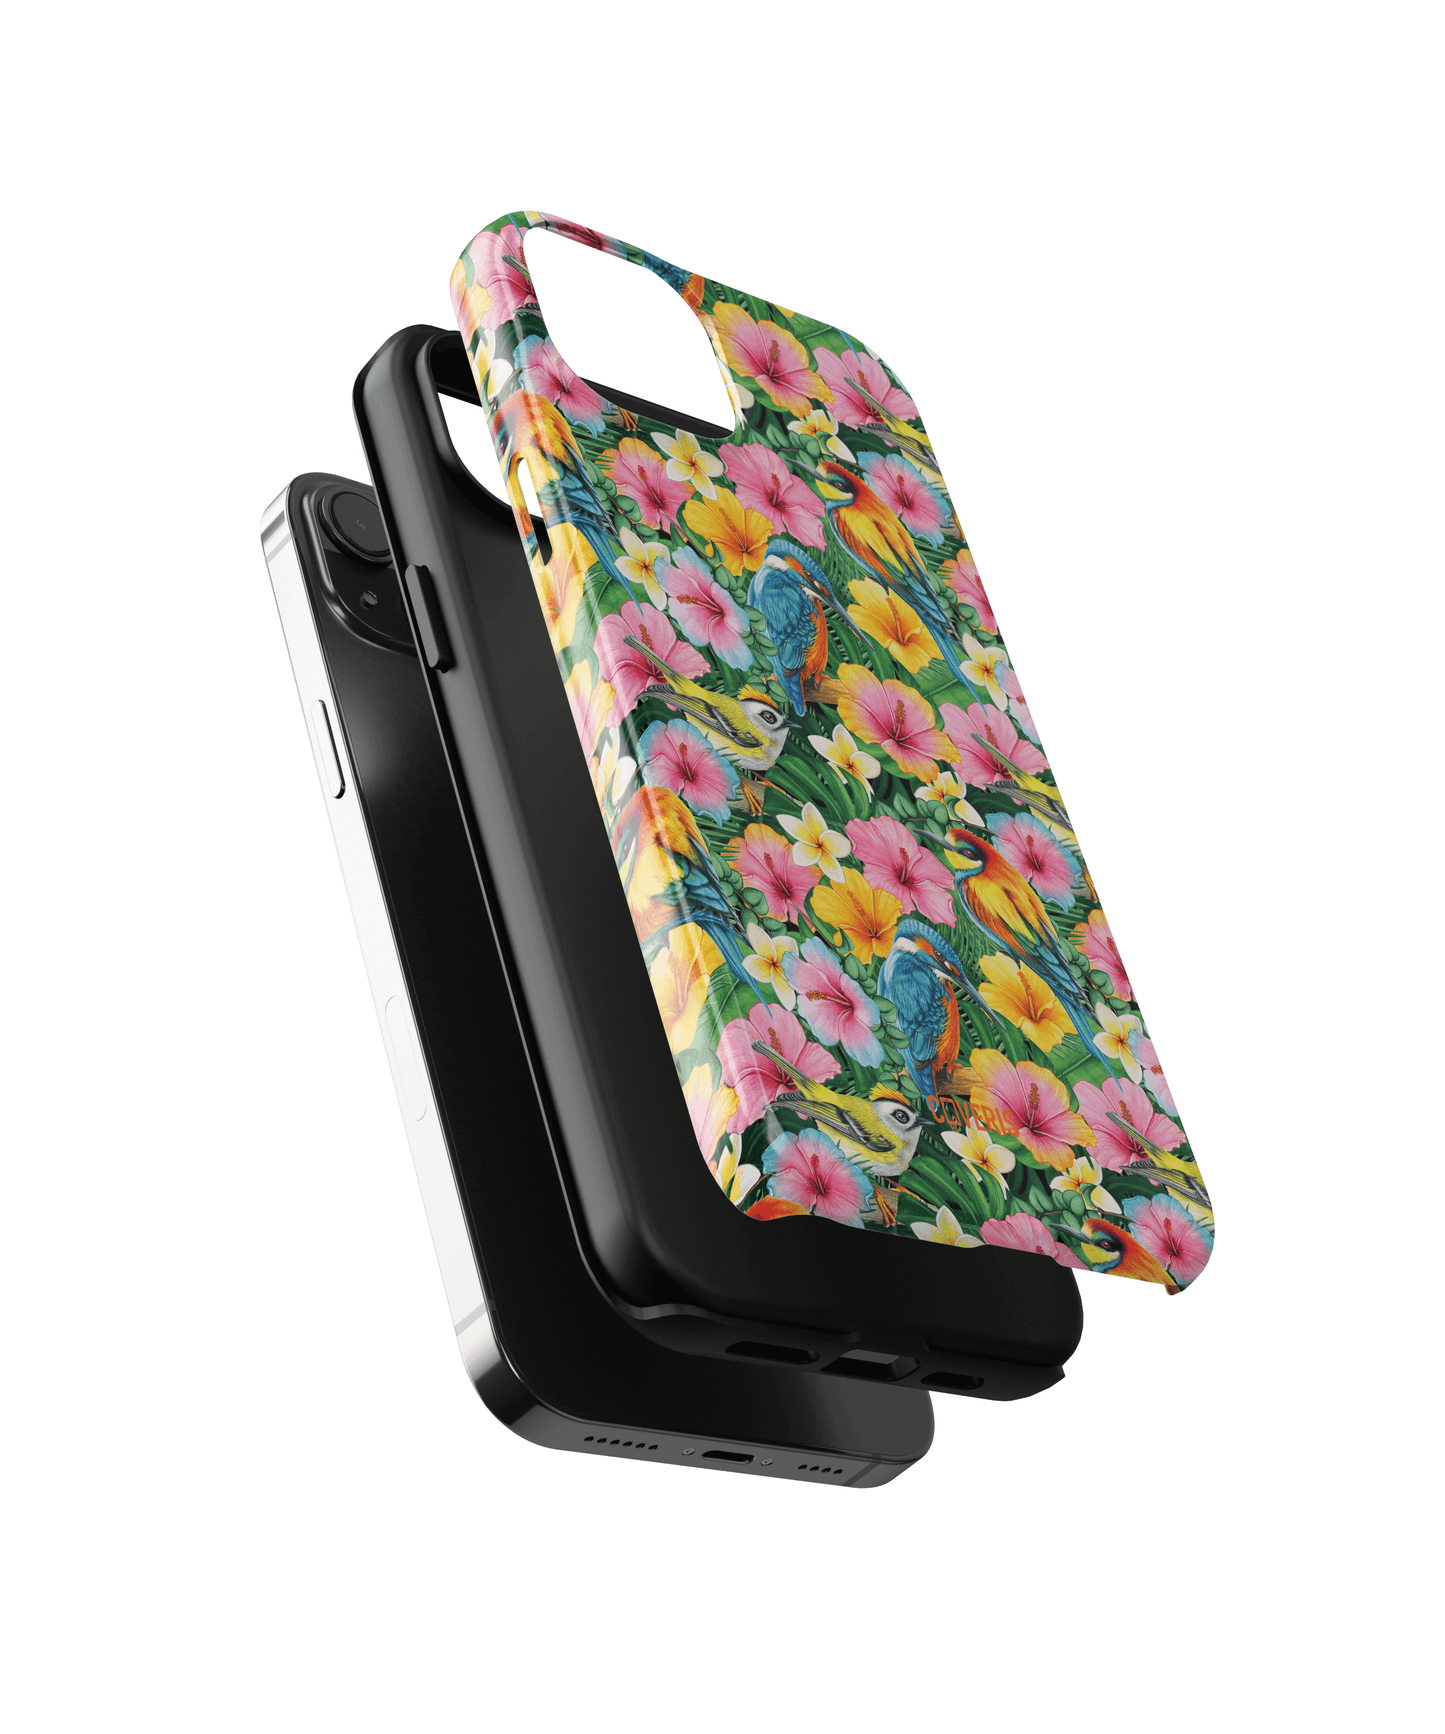 Islander - Poco X3 phone case